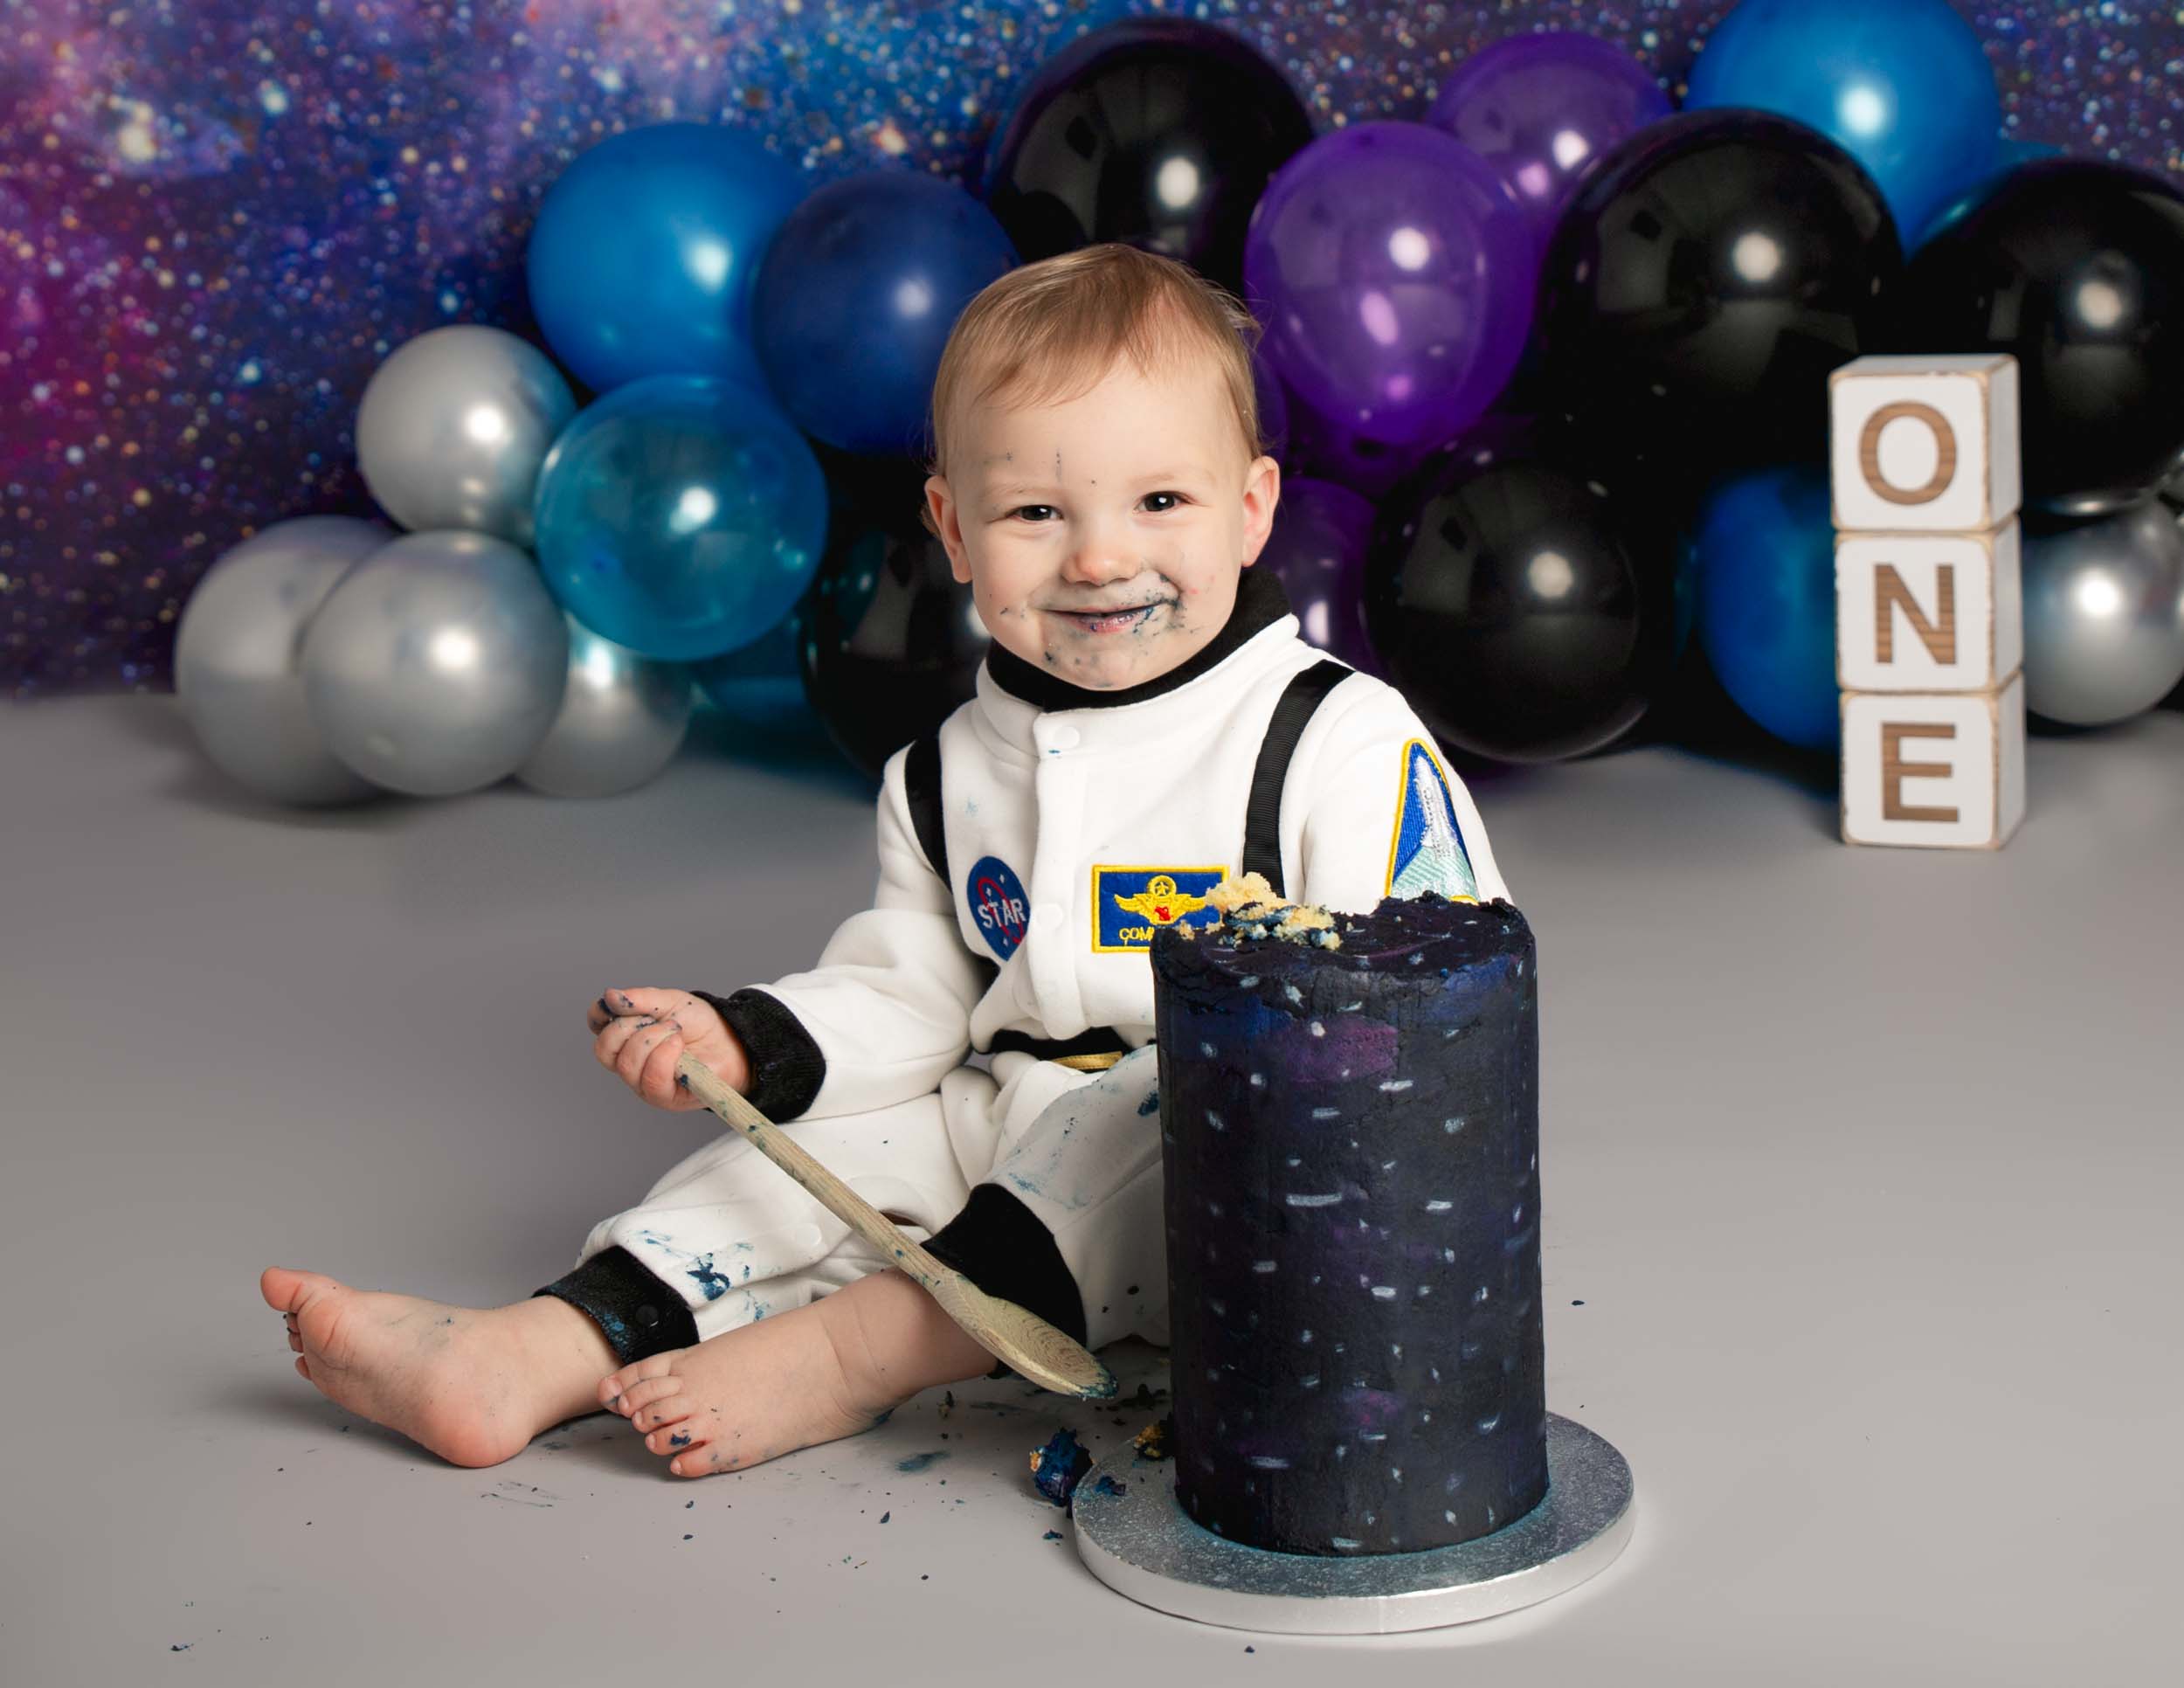 1 year old boy sat in astronaut onesie eating cake